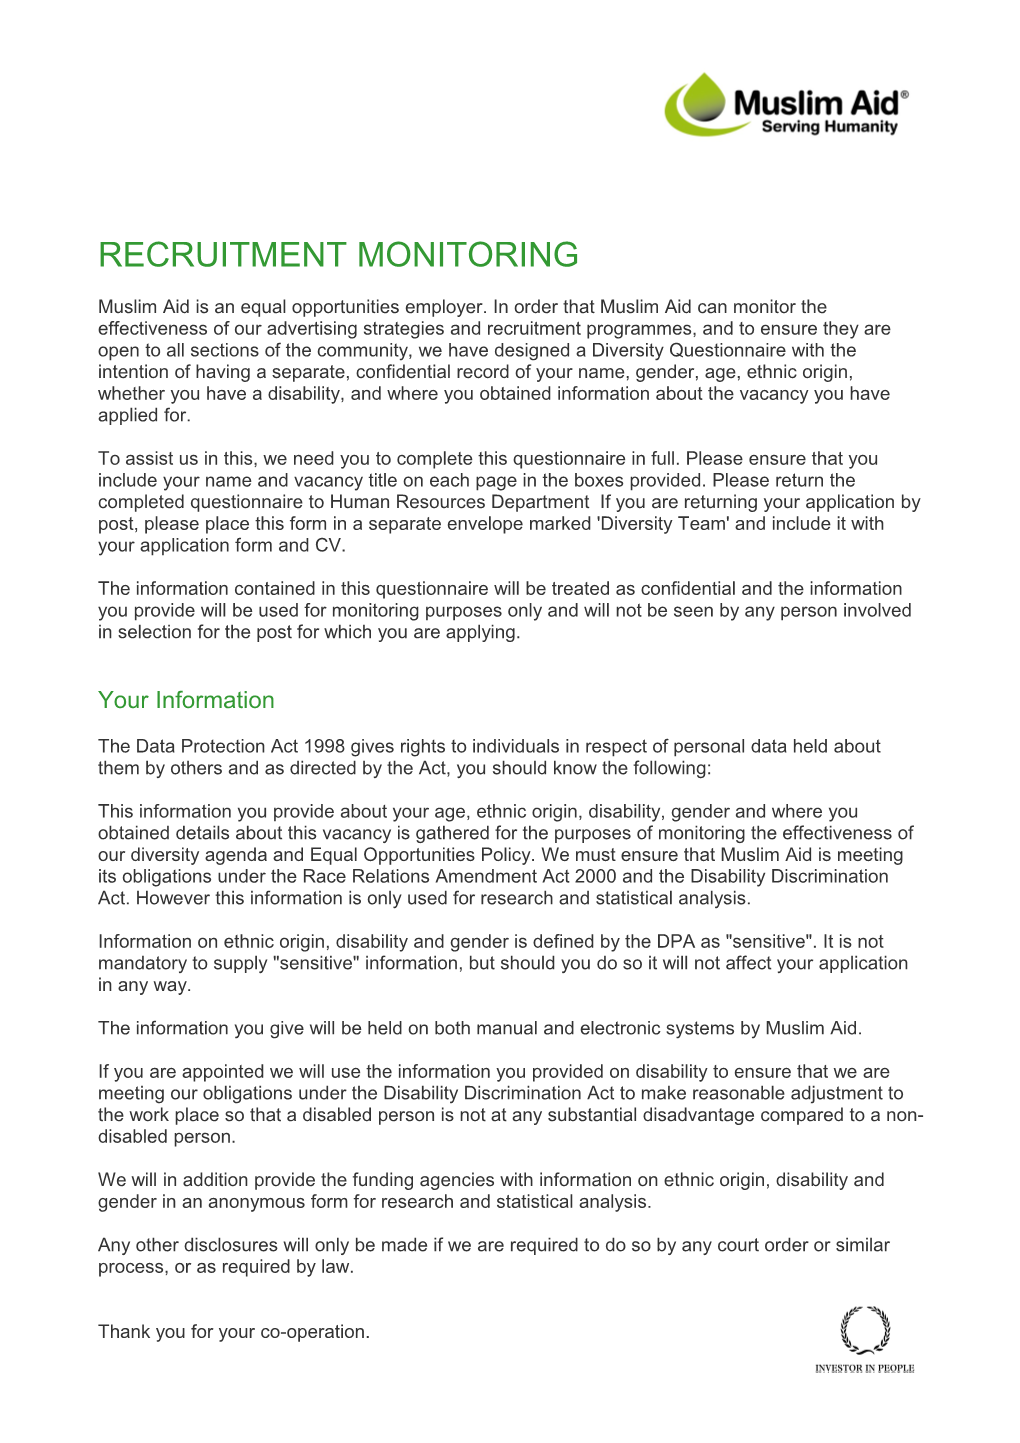 Recruitment Monitoring